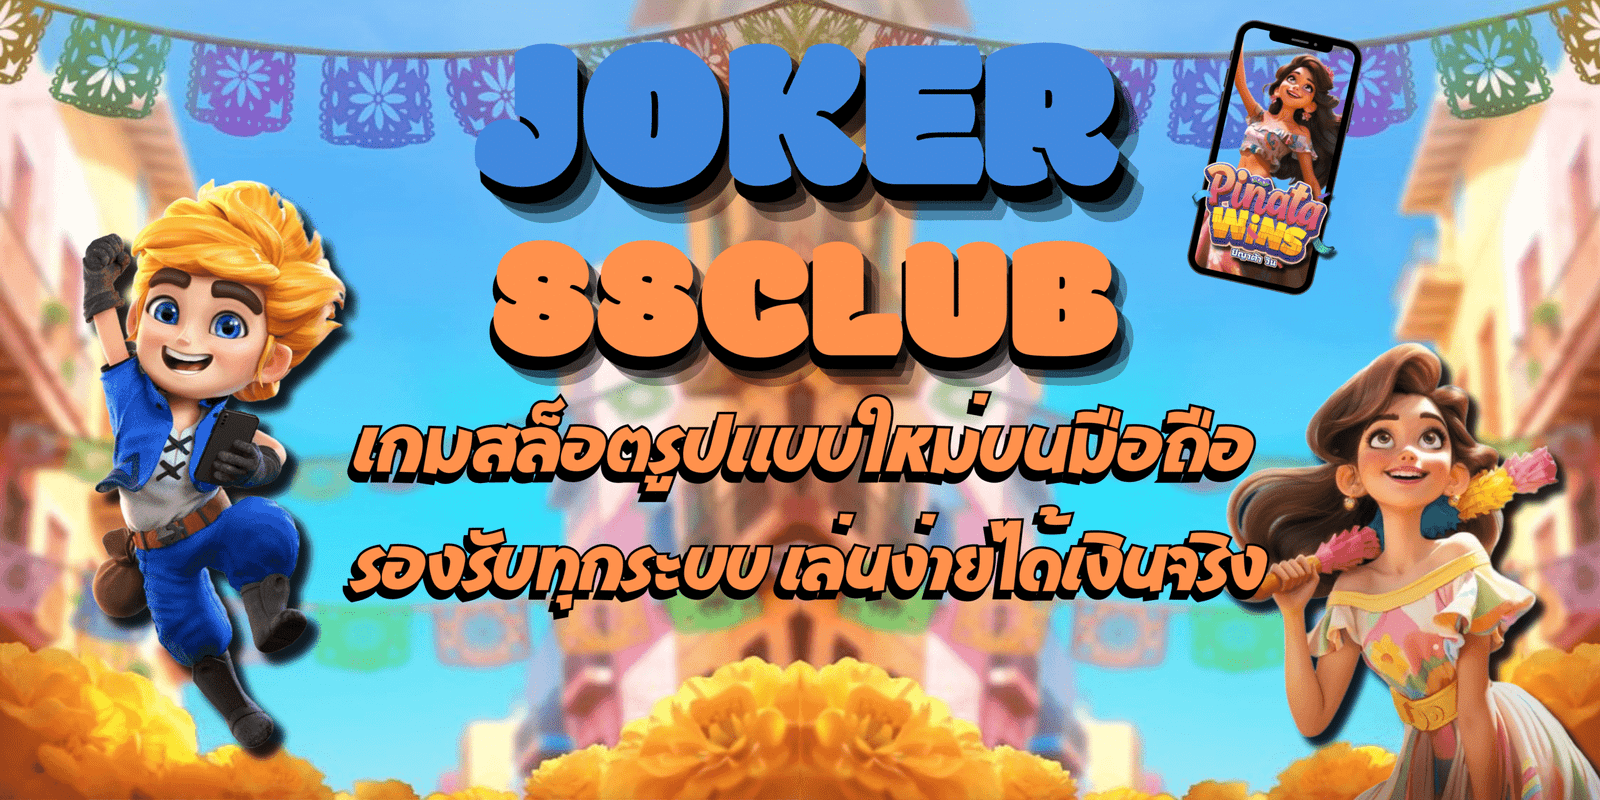 Joker-88club-เกมสล็อตบนมือถือ